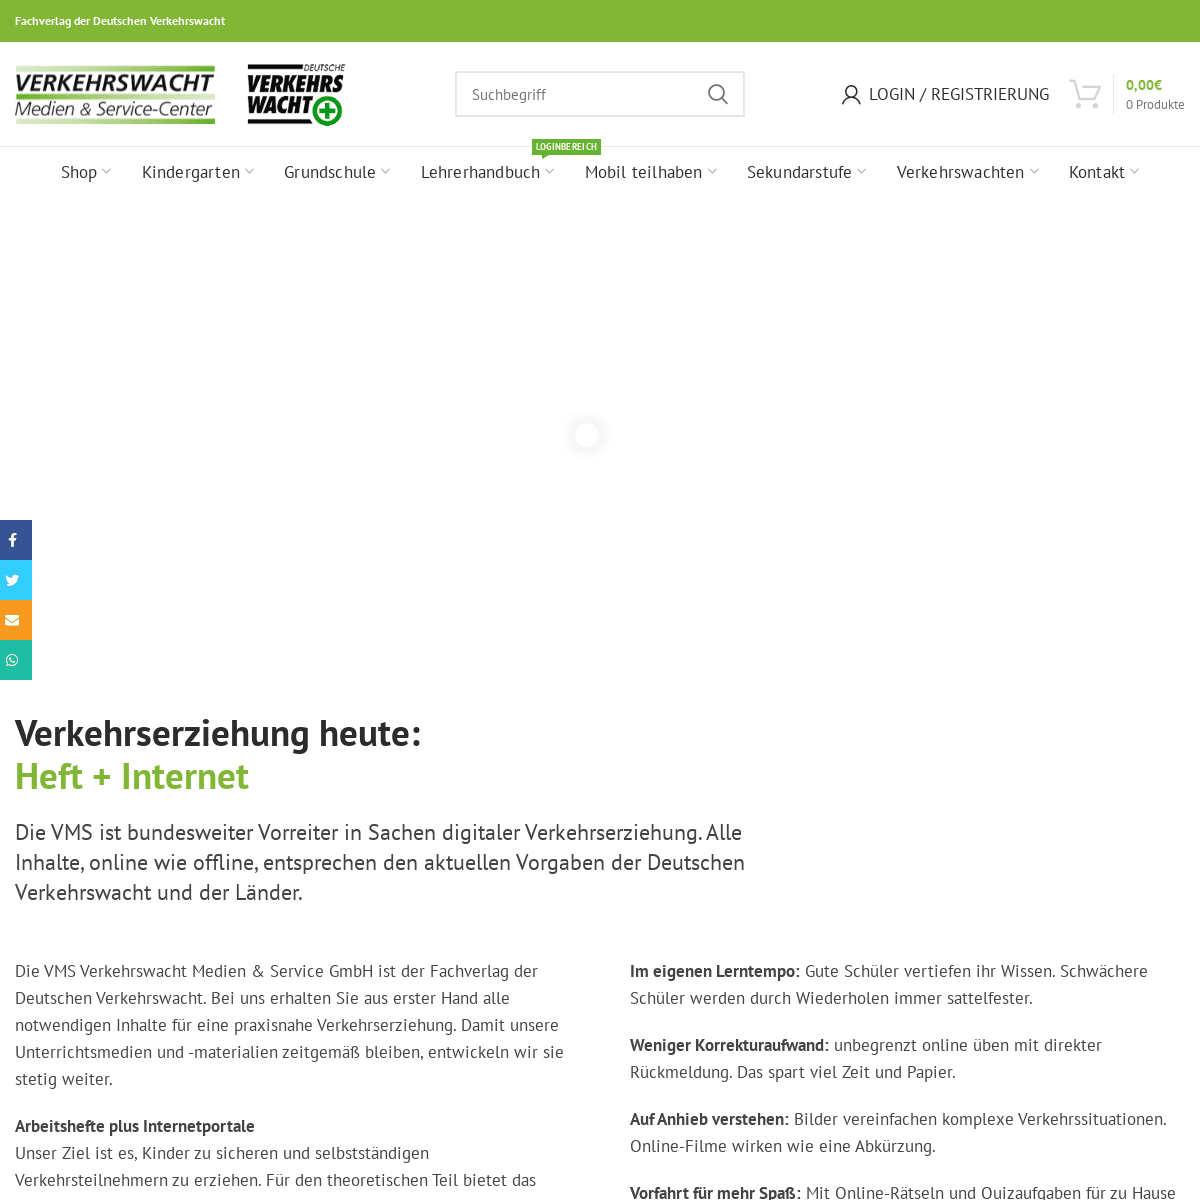 A complete backup of https://verkehrswacht-medien-service.de